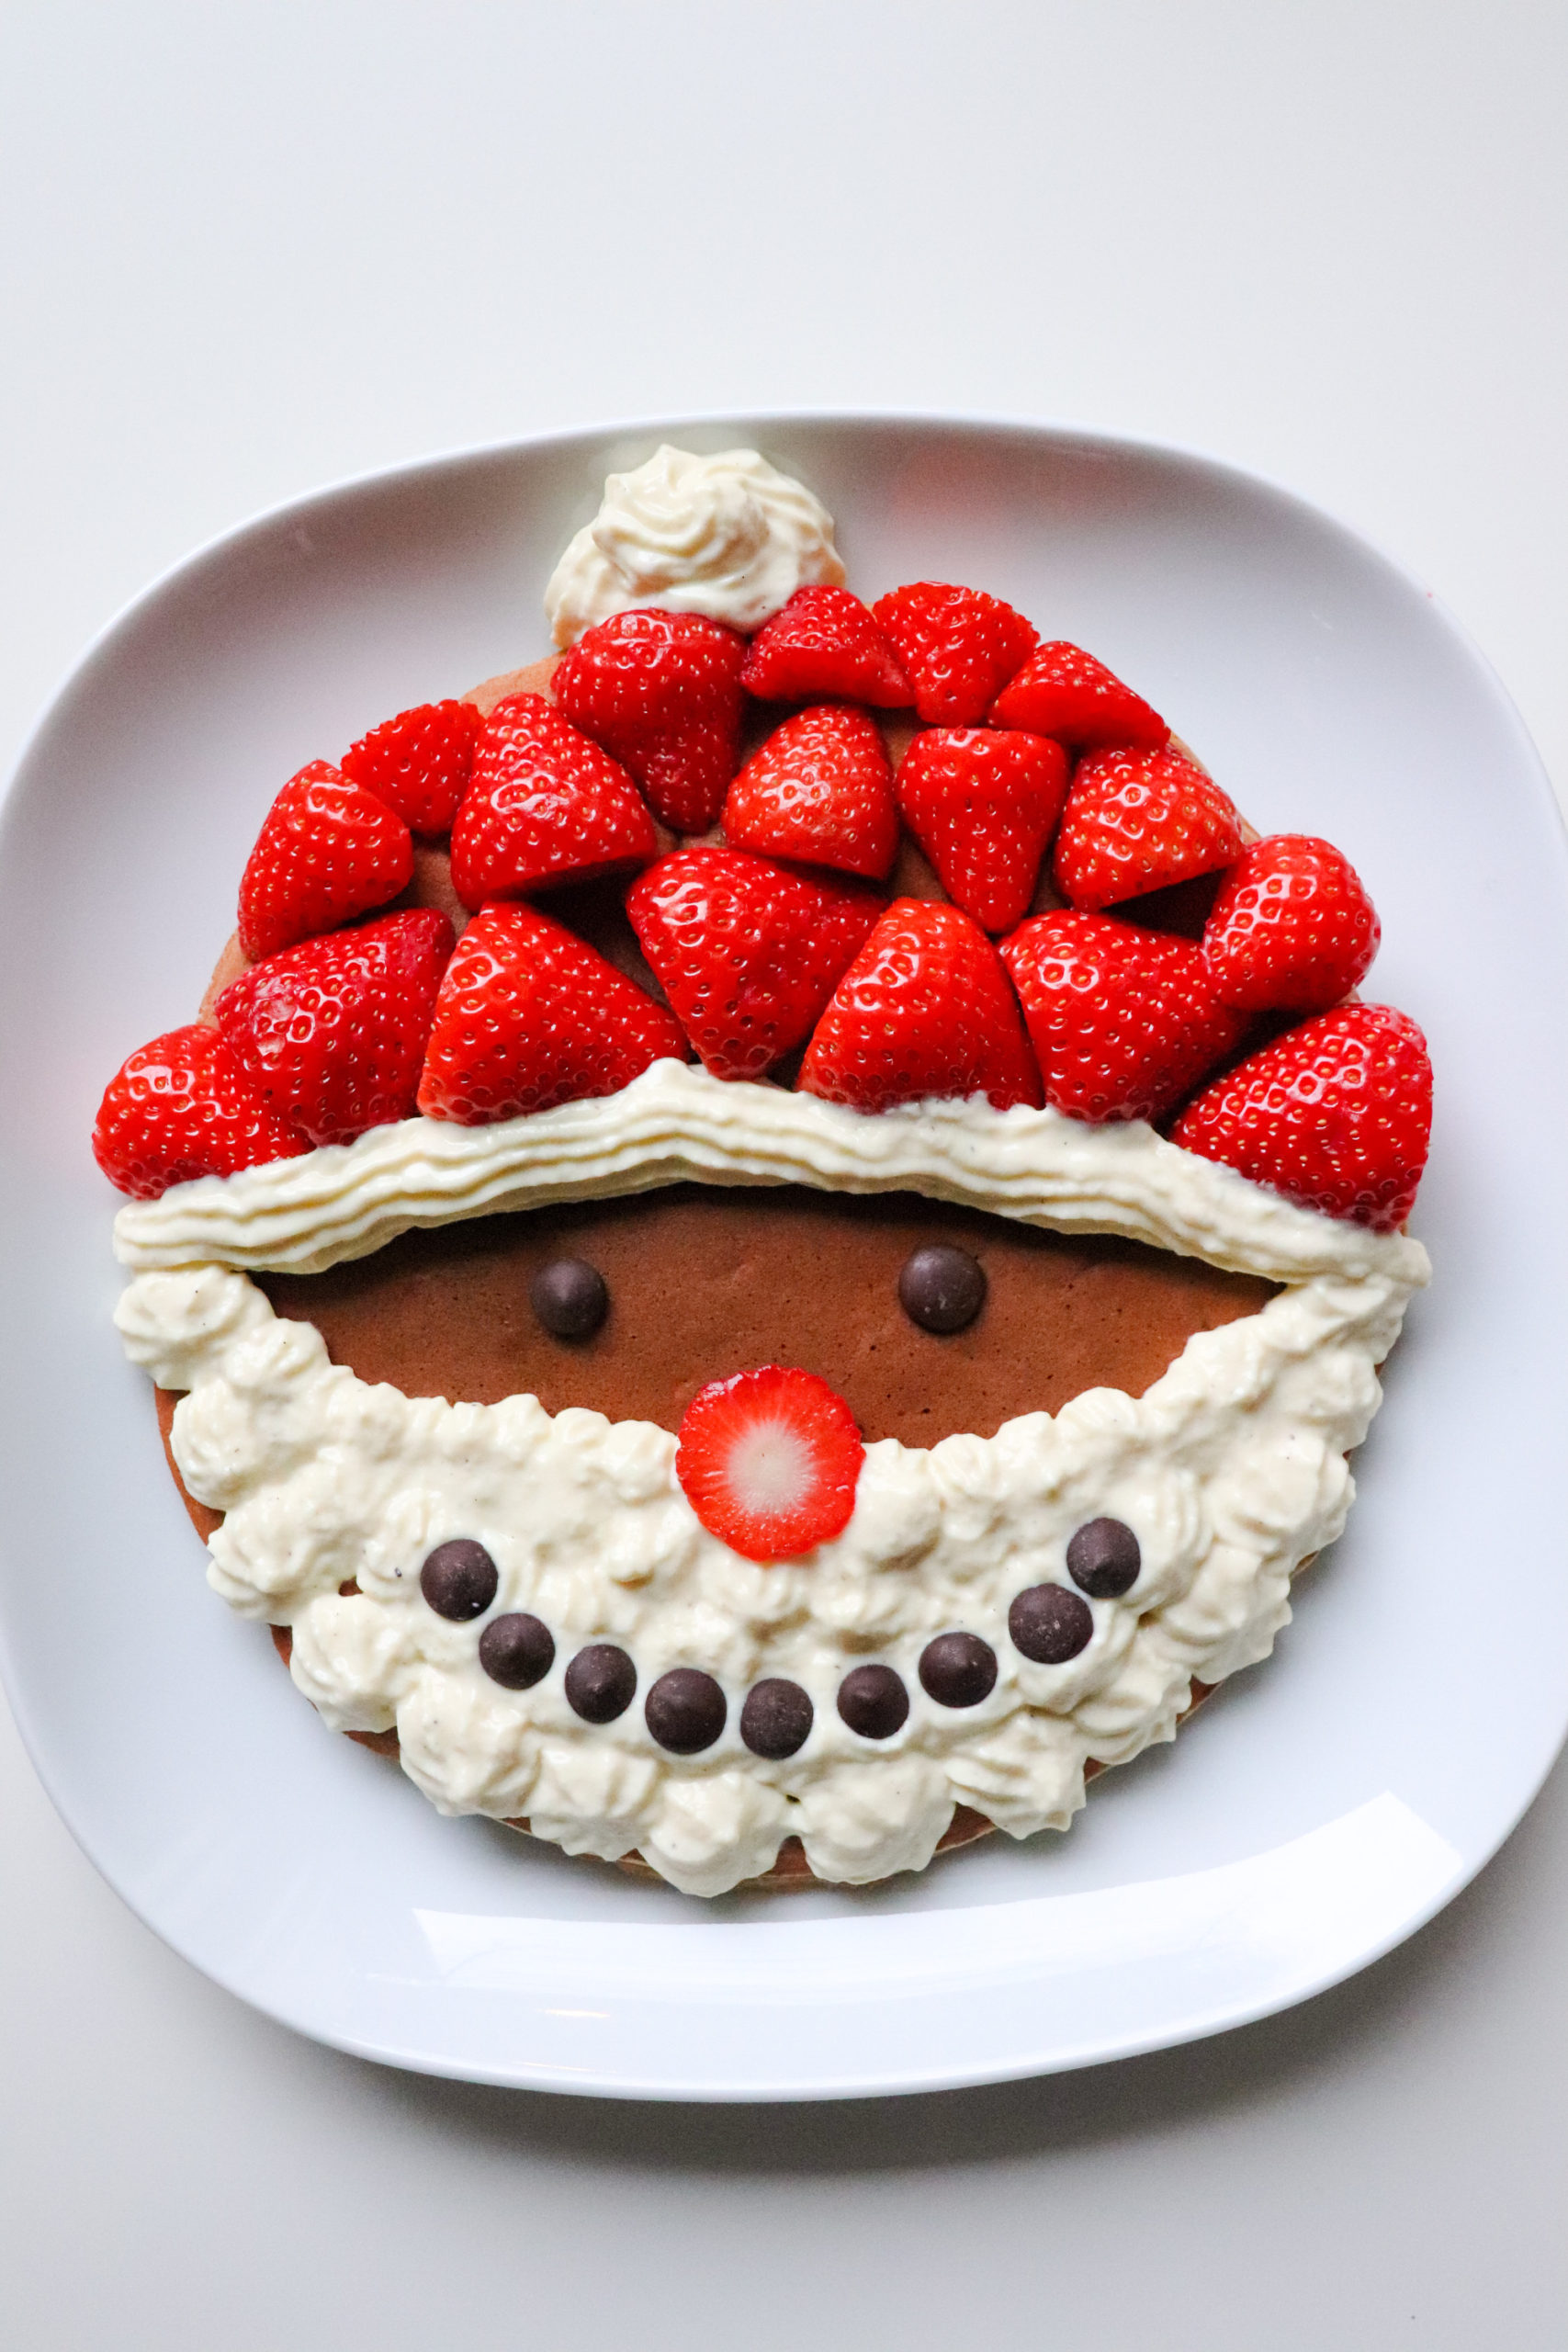 https://www.fitfoodieselma.com/wp-content/uploads/2020/12/Healthy-Santa-Pancake-scaled.jpg